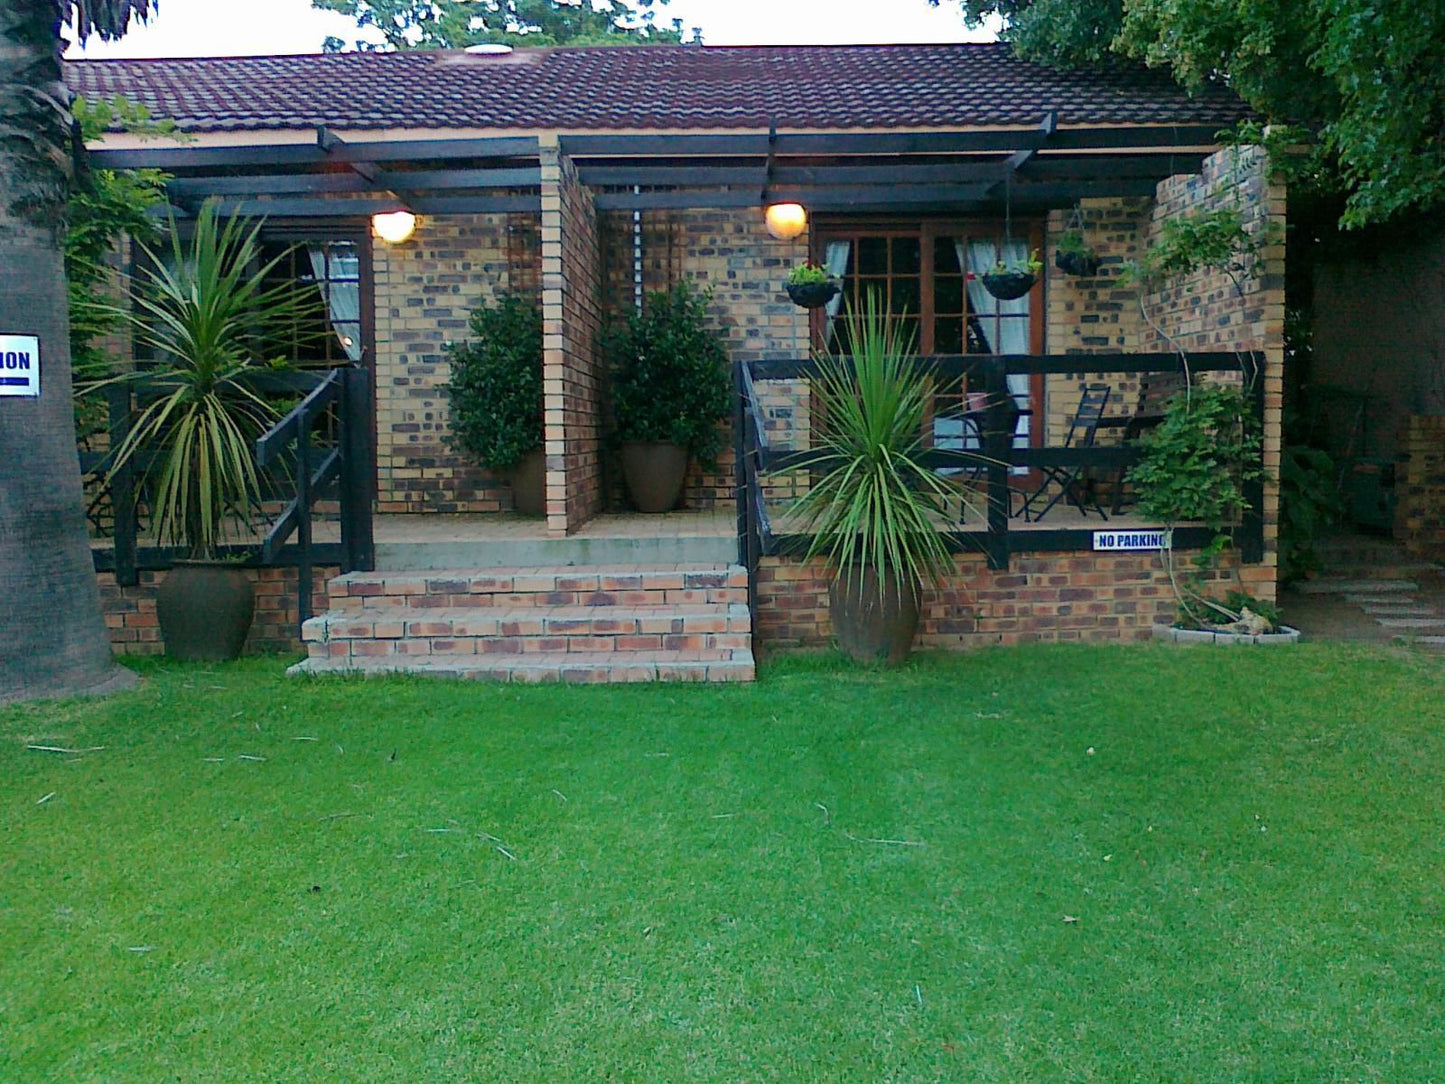 Khokha Moya Guest House Ermelo Mpumalanga South Africa House, Building, Architecture, Brick Texture, Texture, Garden, Nature, Plant